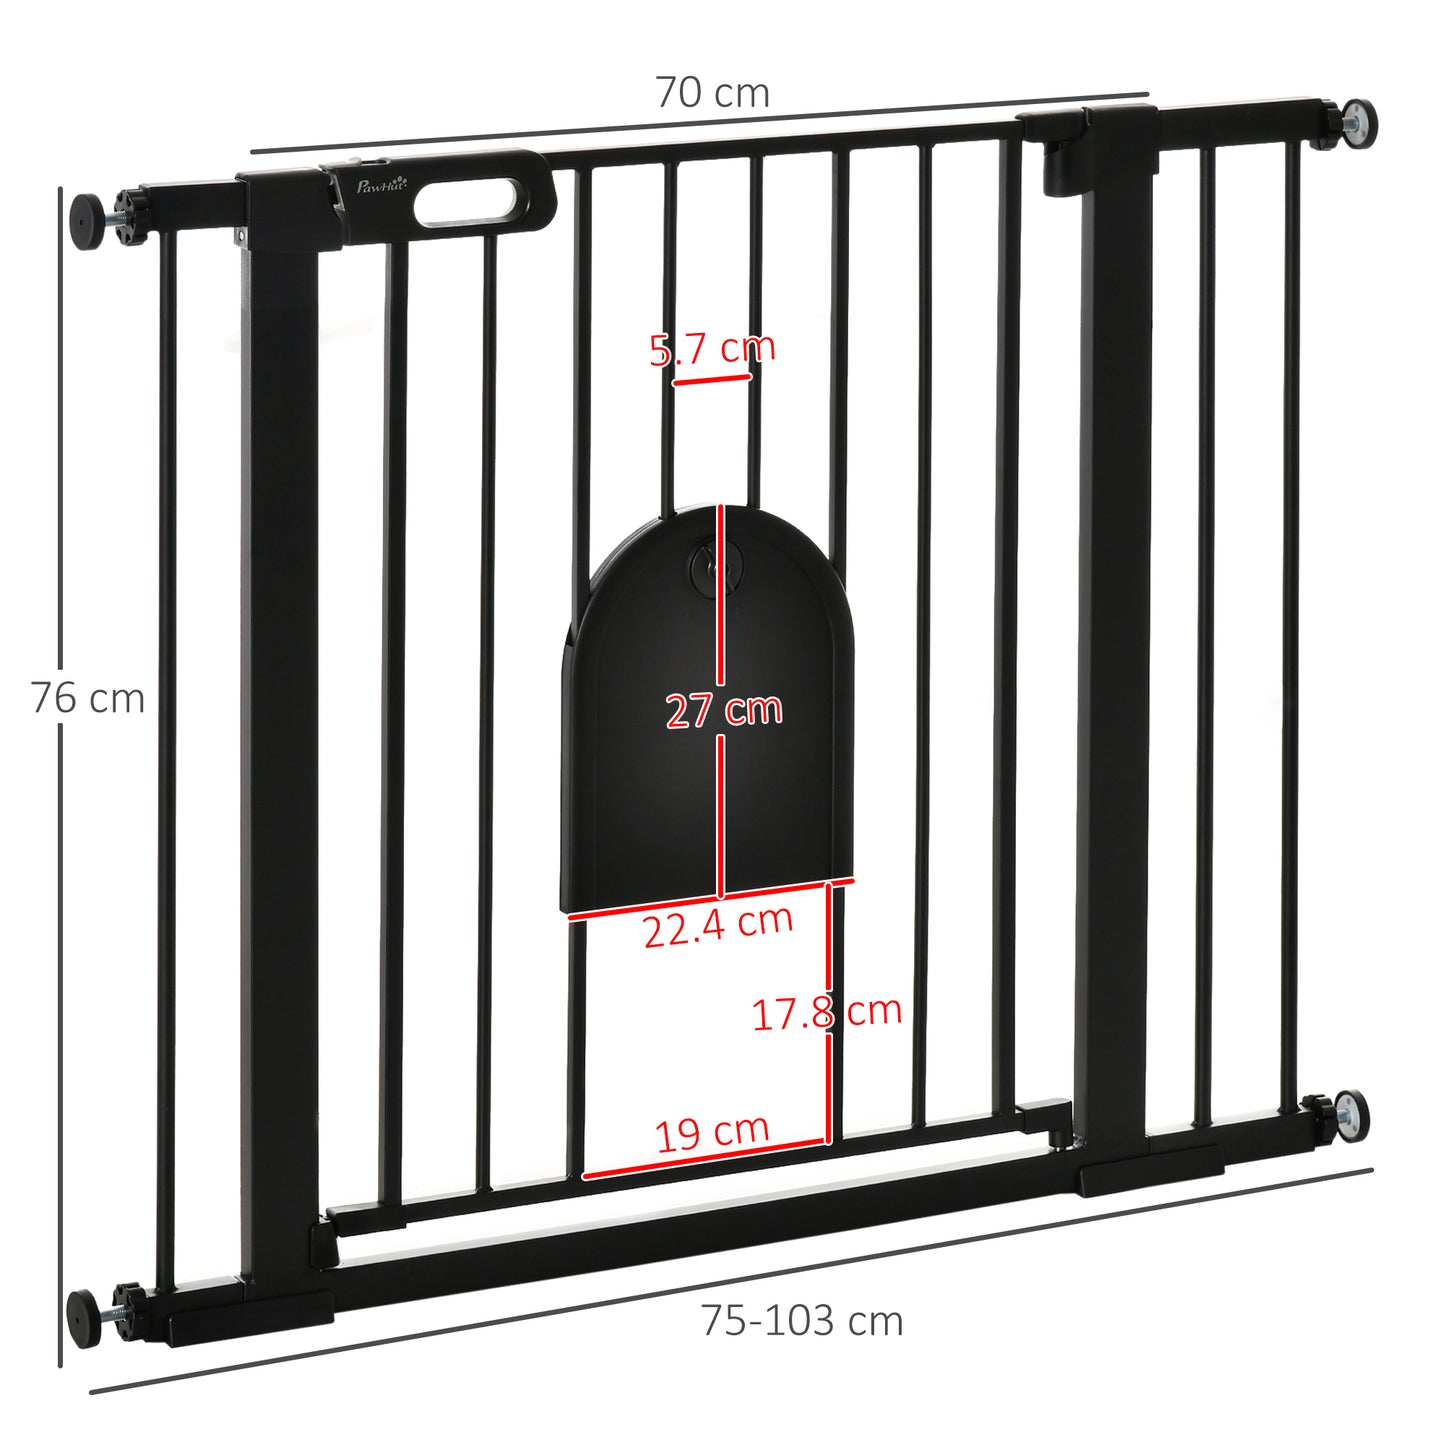 PawHut 75-103 cm Extra Wide Pet Safety Gate, Stair Pressure Fit, Double Locking for Doorways, Hallways, Black